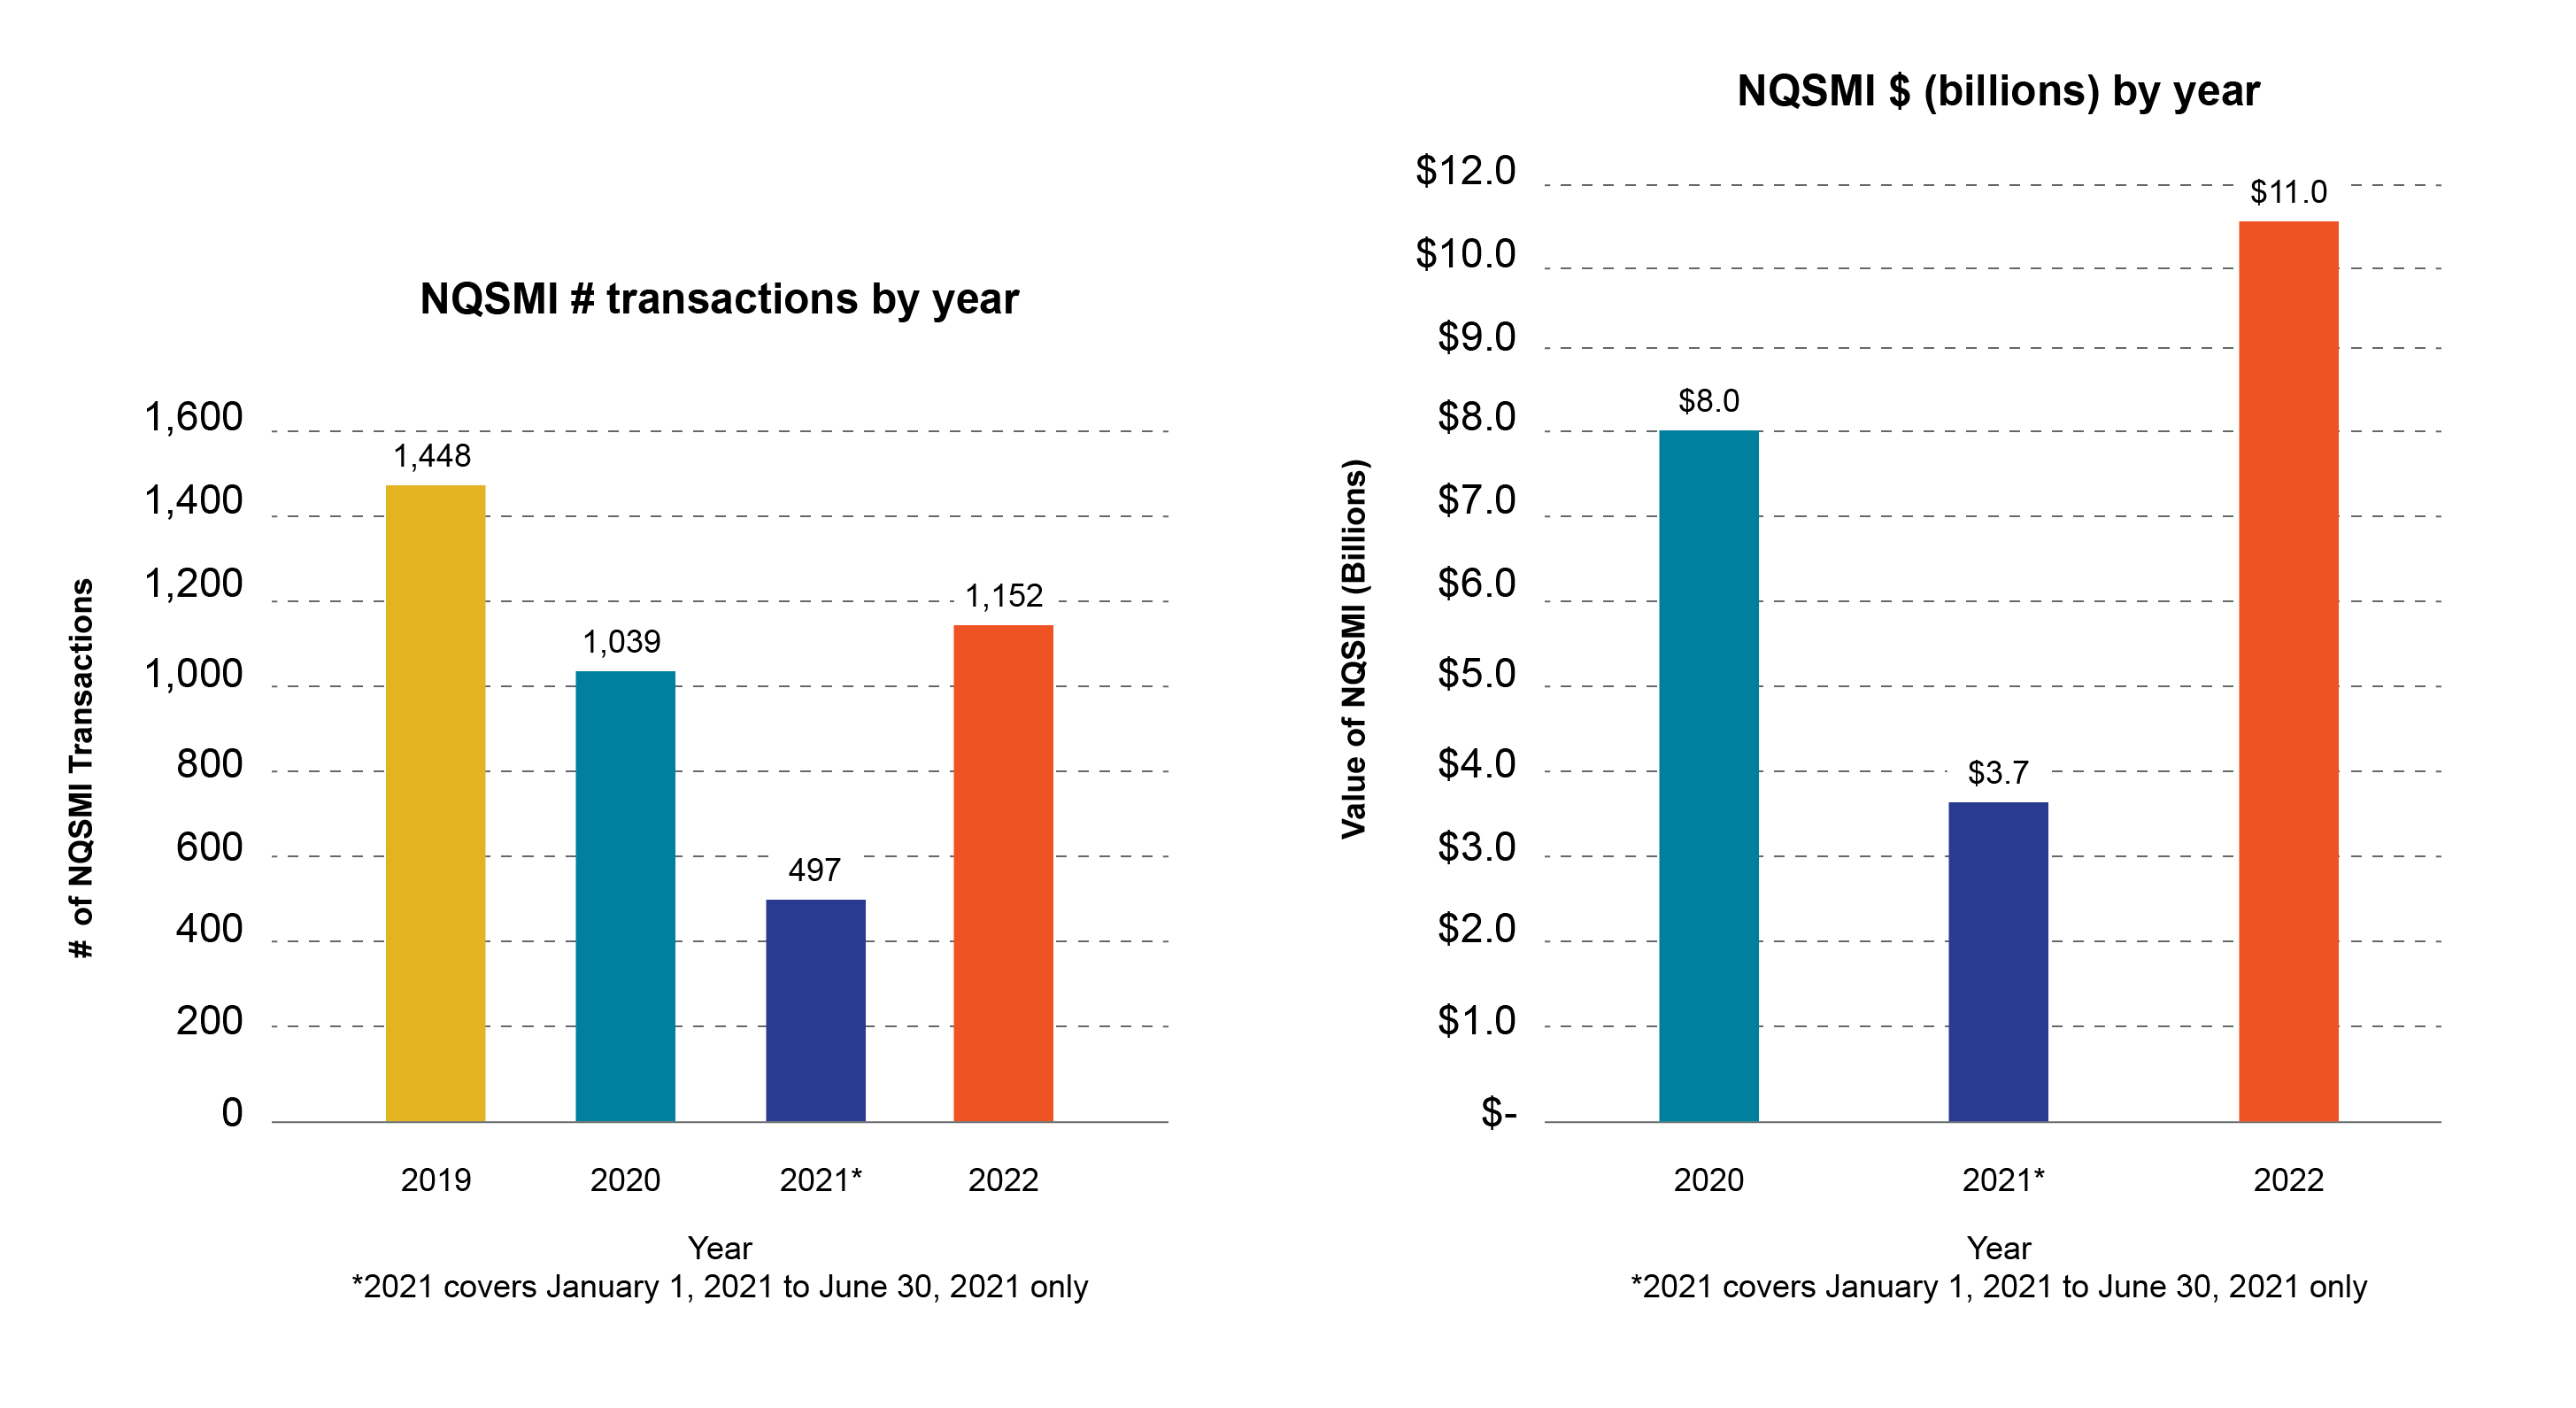 NQSMI # of transactions by year, NQSMI $ (billions) by year